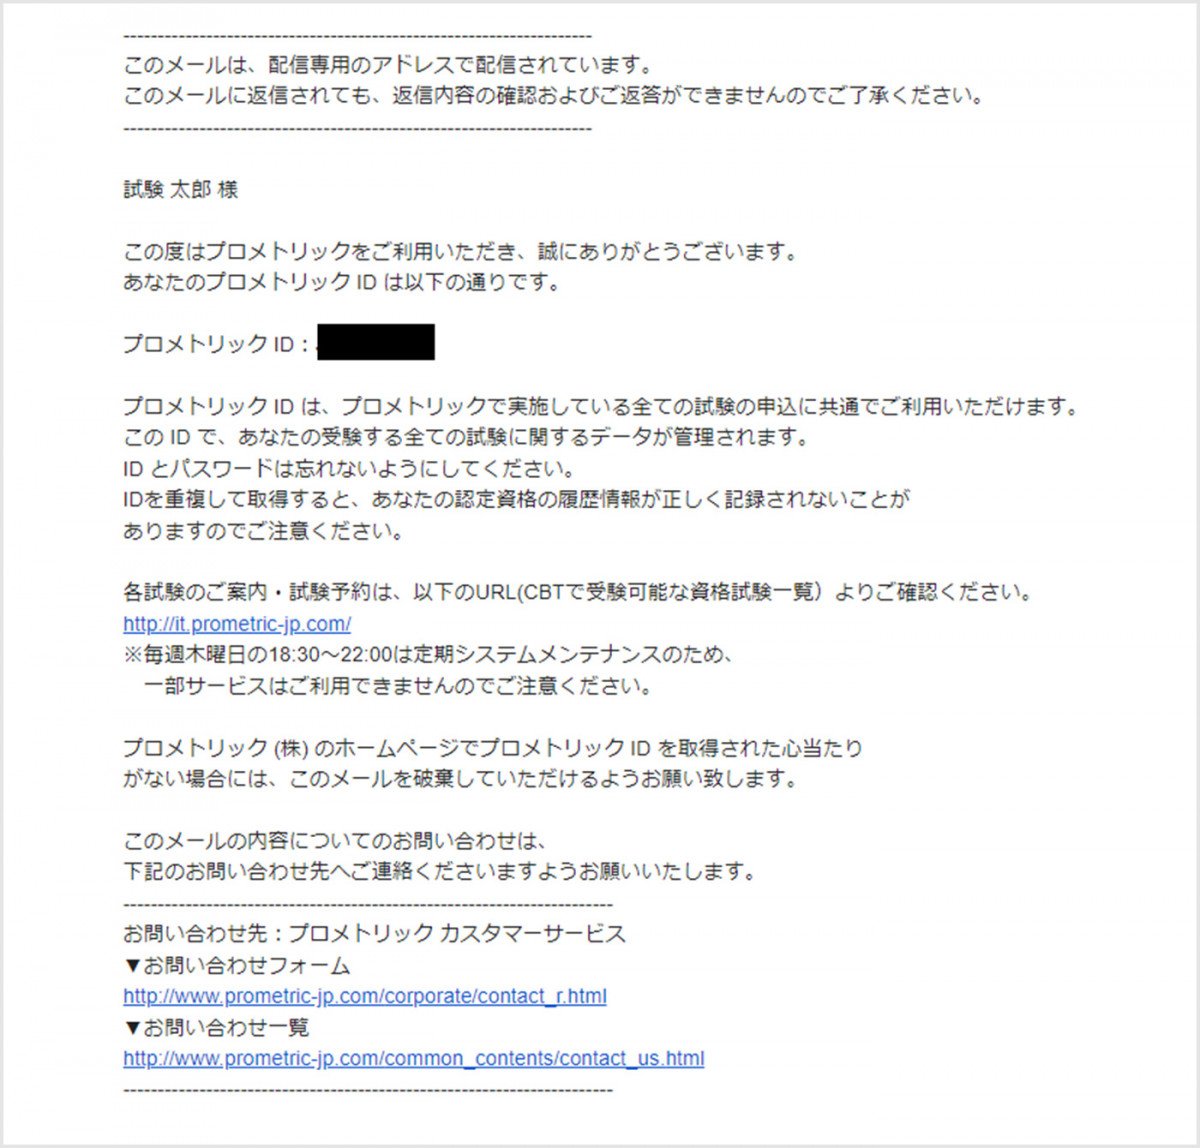 「prometric@prometric-jp.com」より通知されたメールサンプル